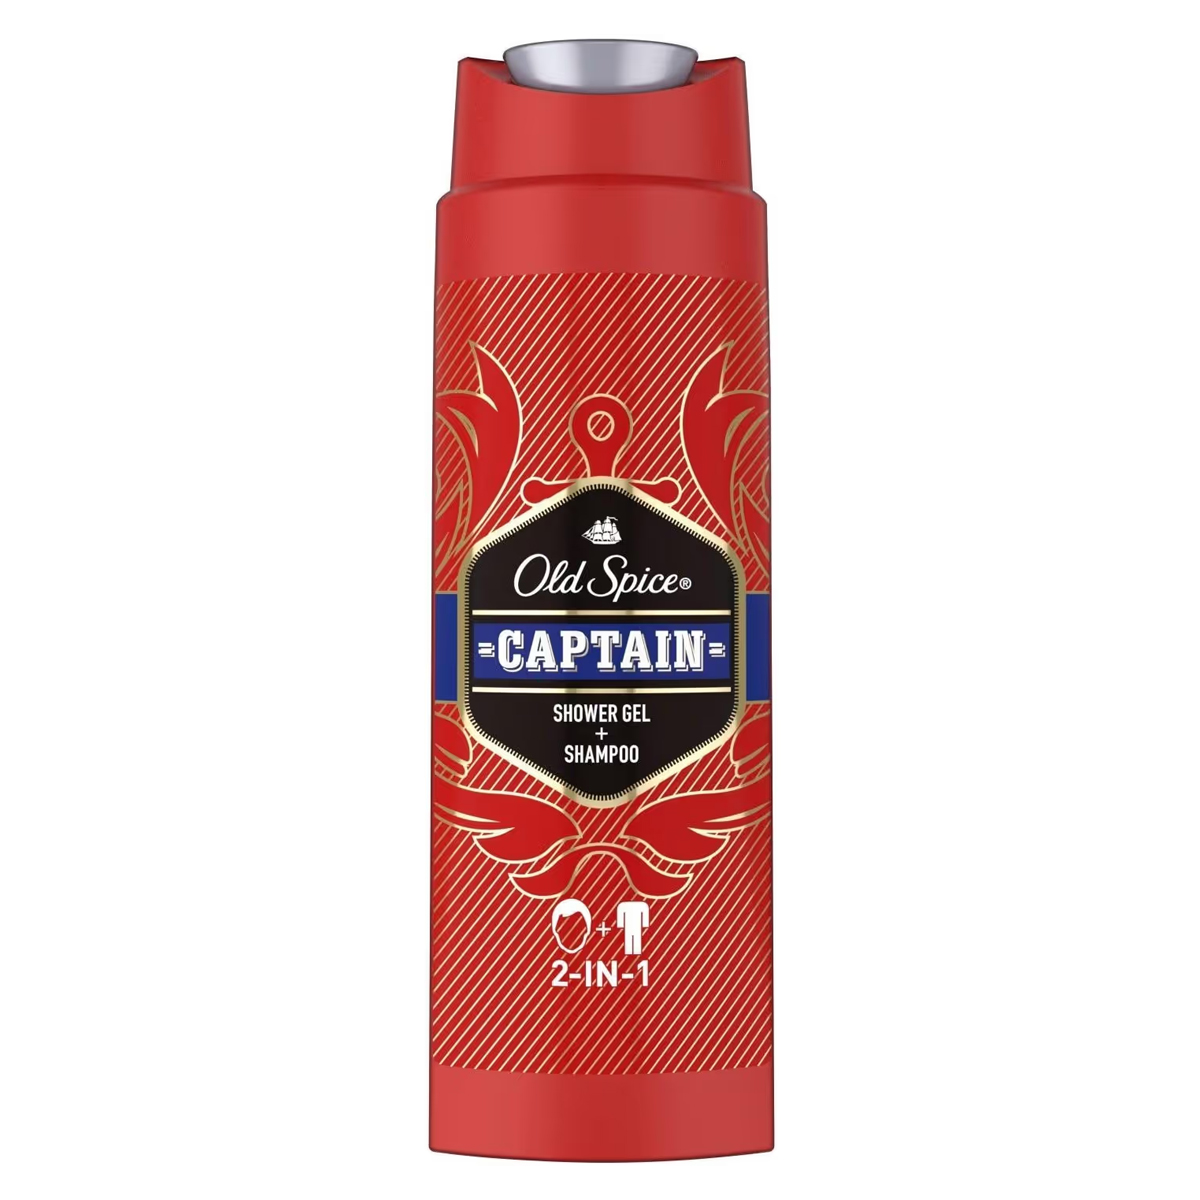 شامپو سر و بدن کاپیتان~Captain Hair And Body Shampoo~OLD SPICE